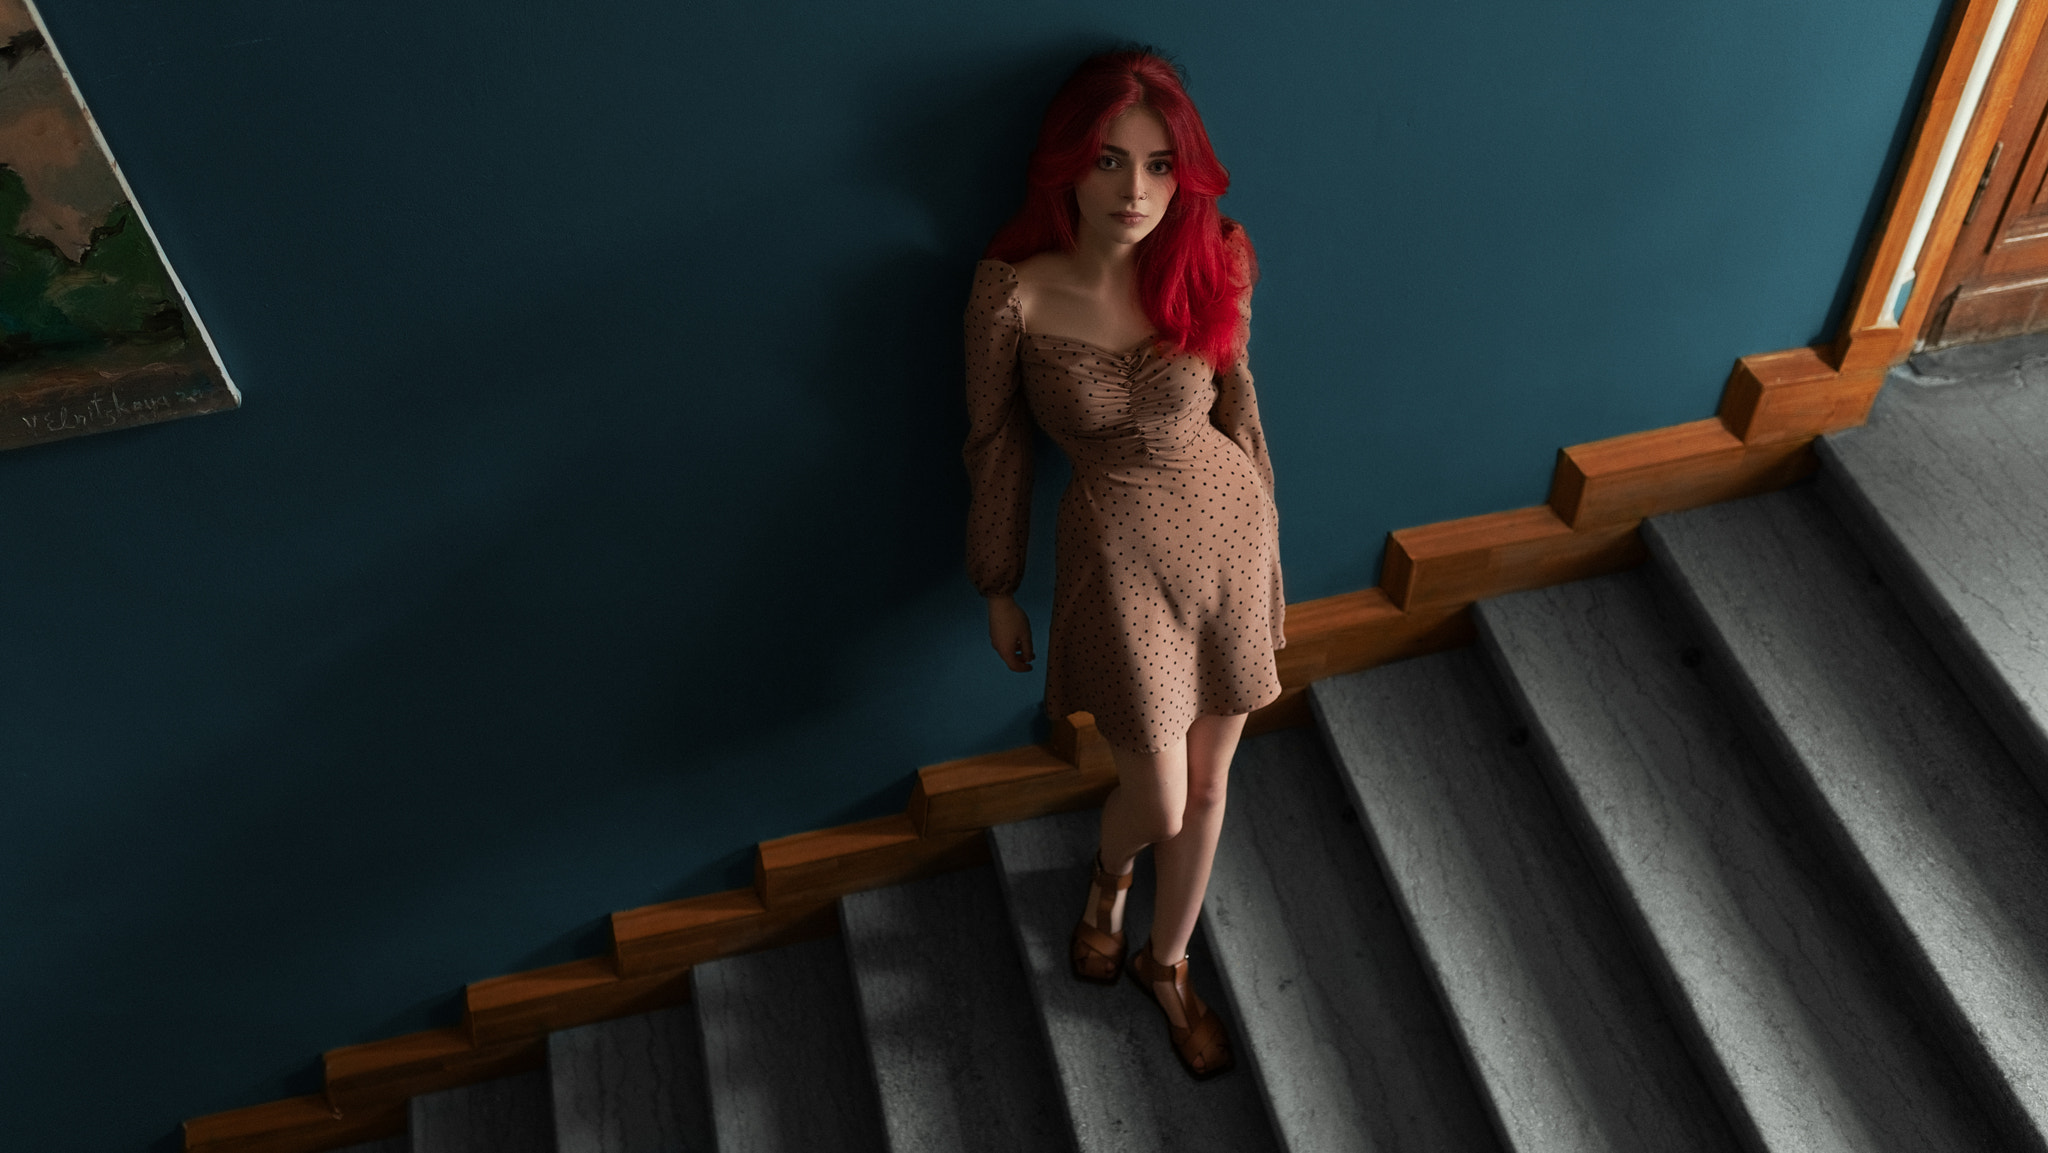 George Poison Women Redhead Dress High Angle Stairs Long Hair 2048x1153